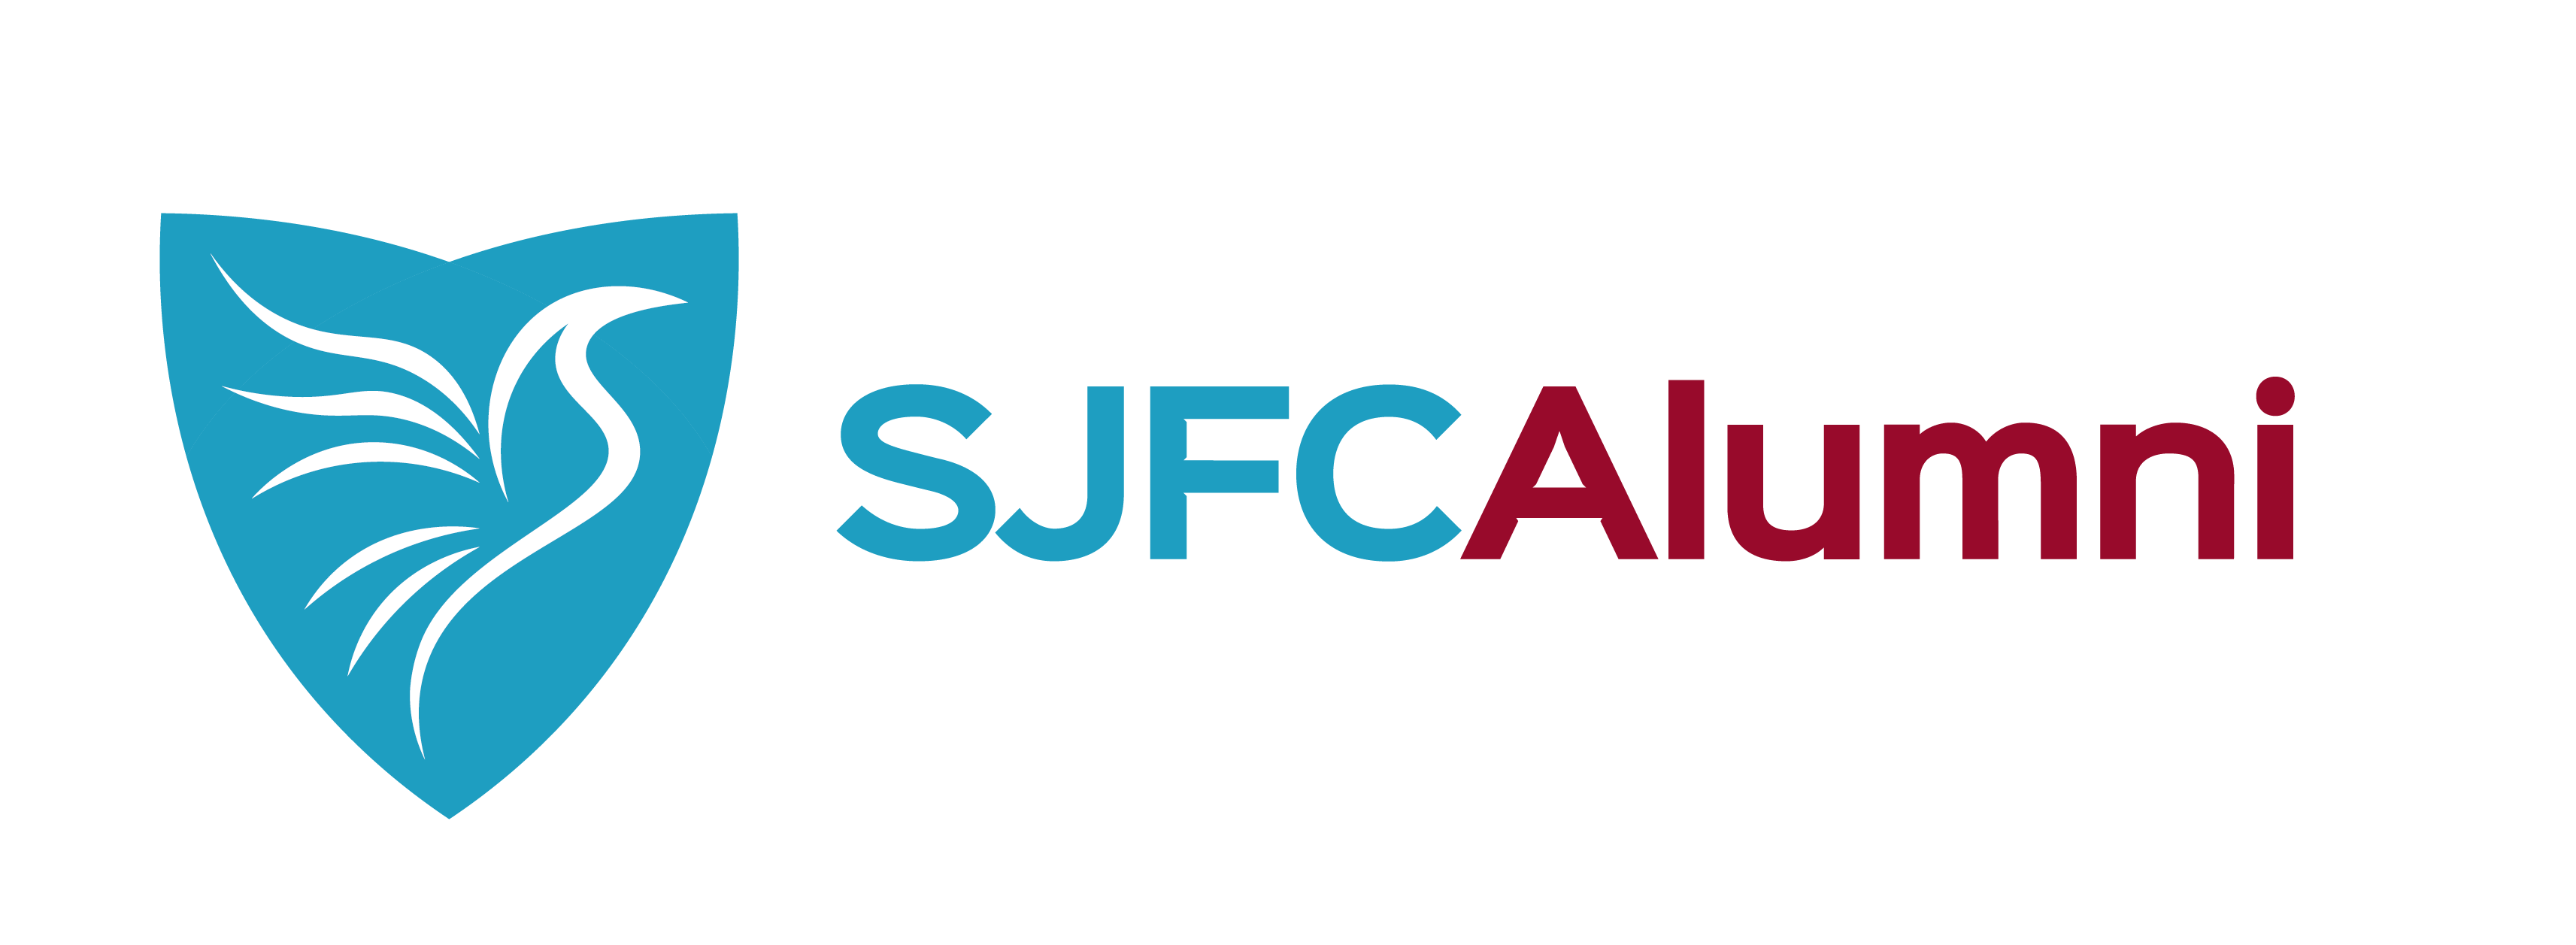 SJFC alumni logo fnl_horizontal col.png